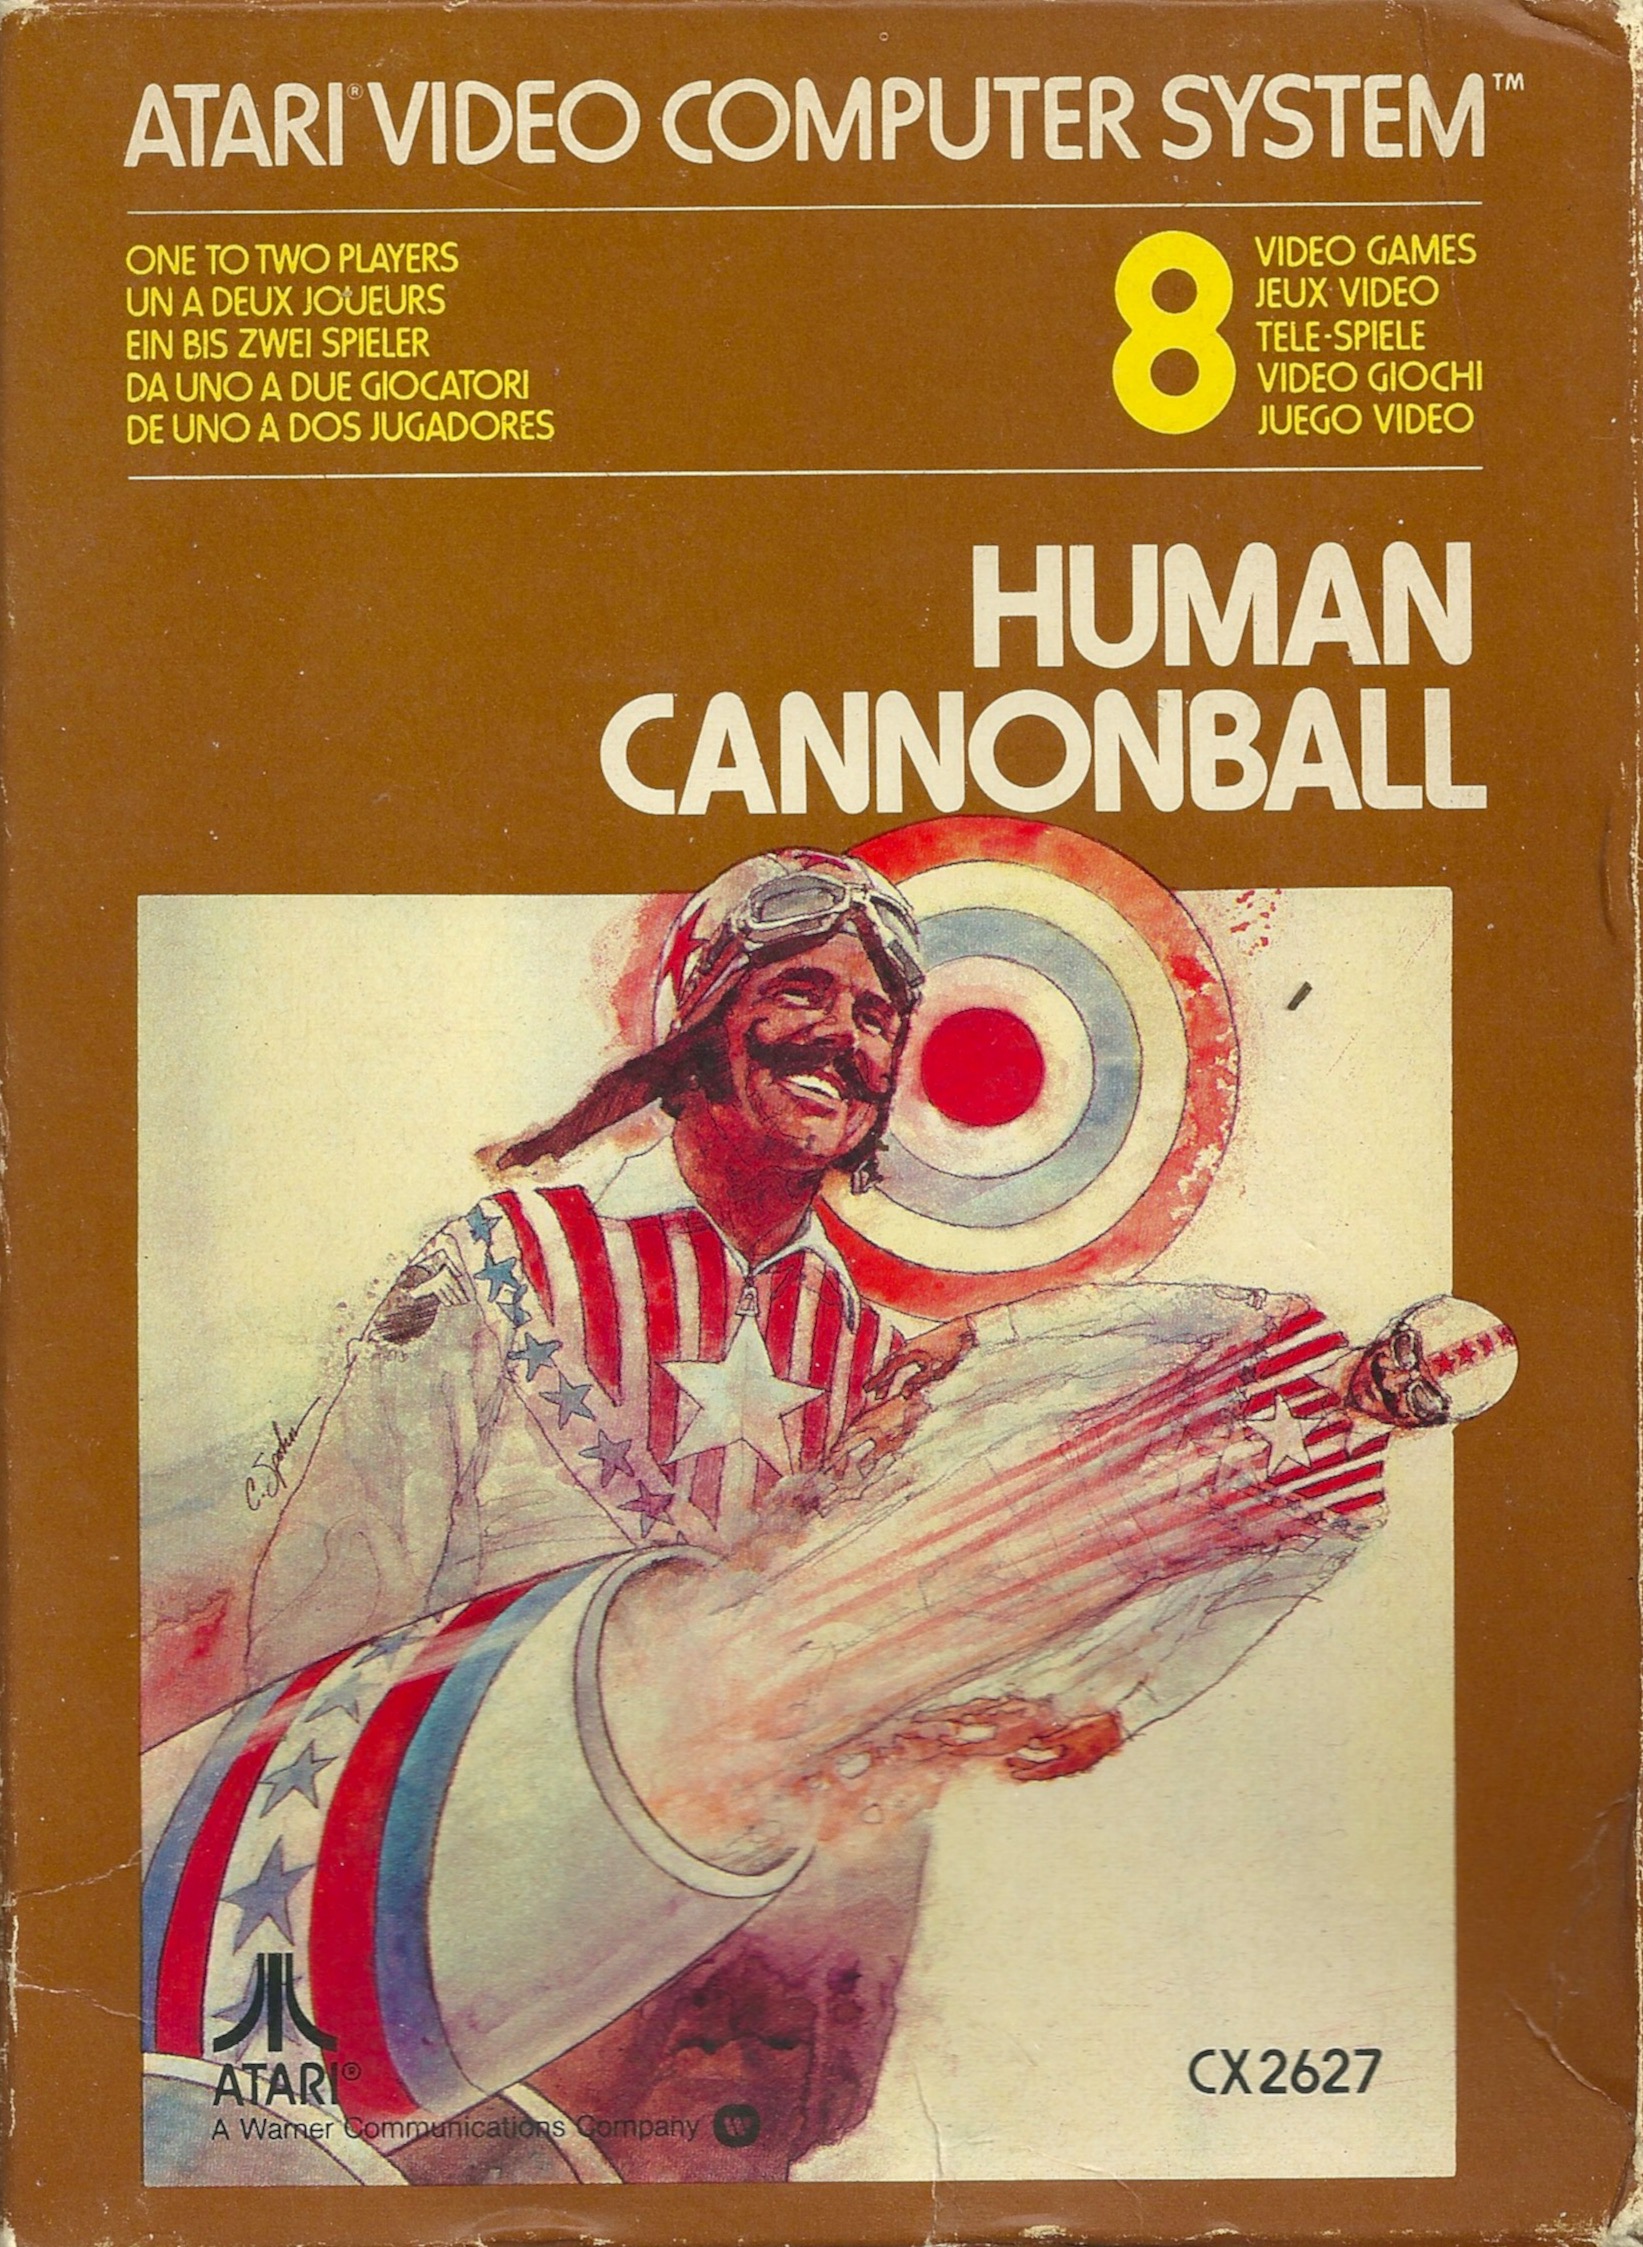 Atari VCS: Human Cannonball